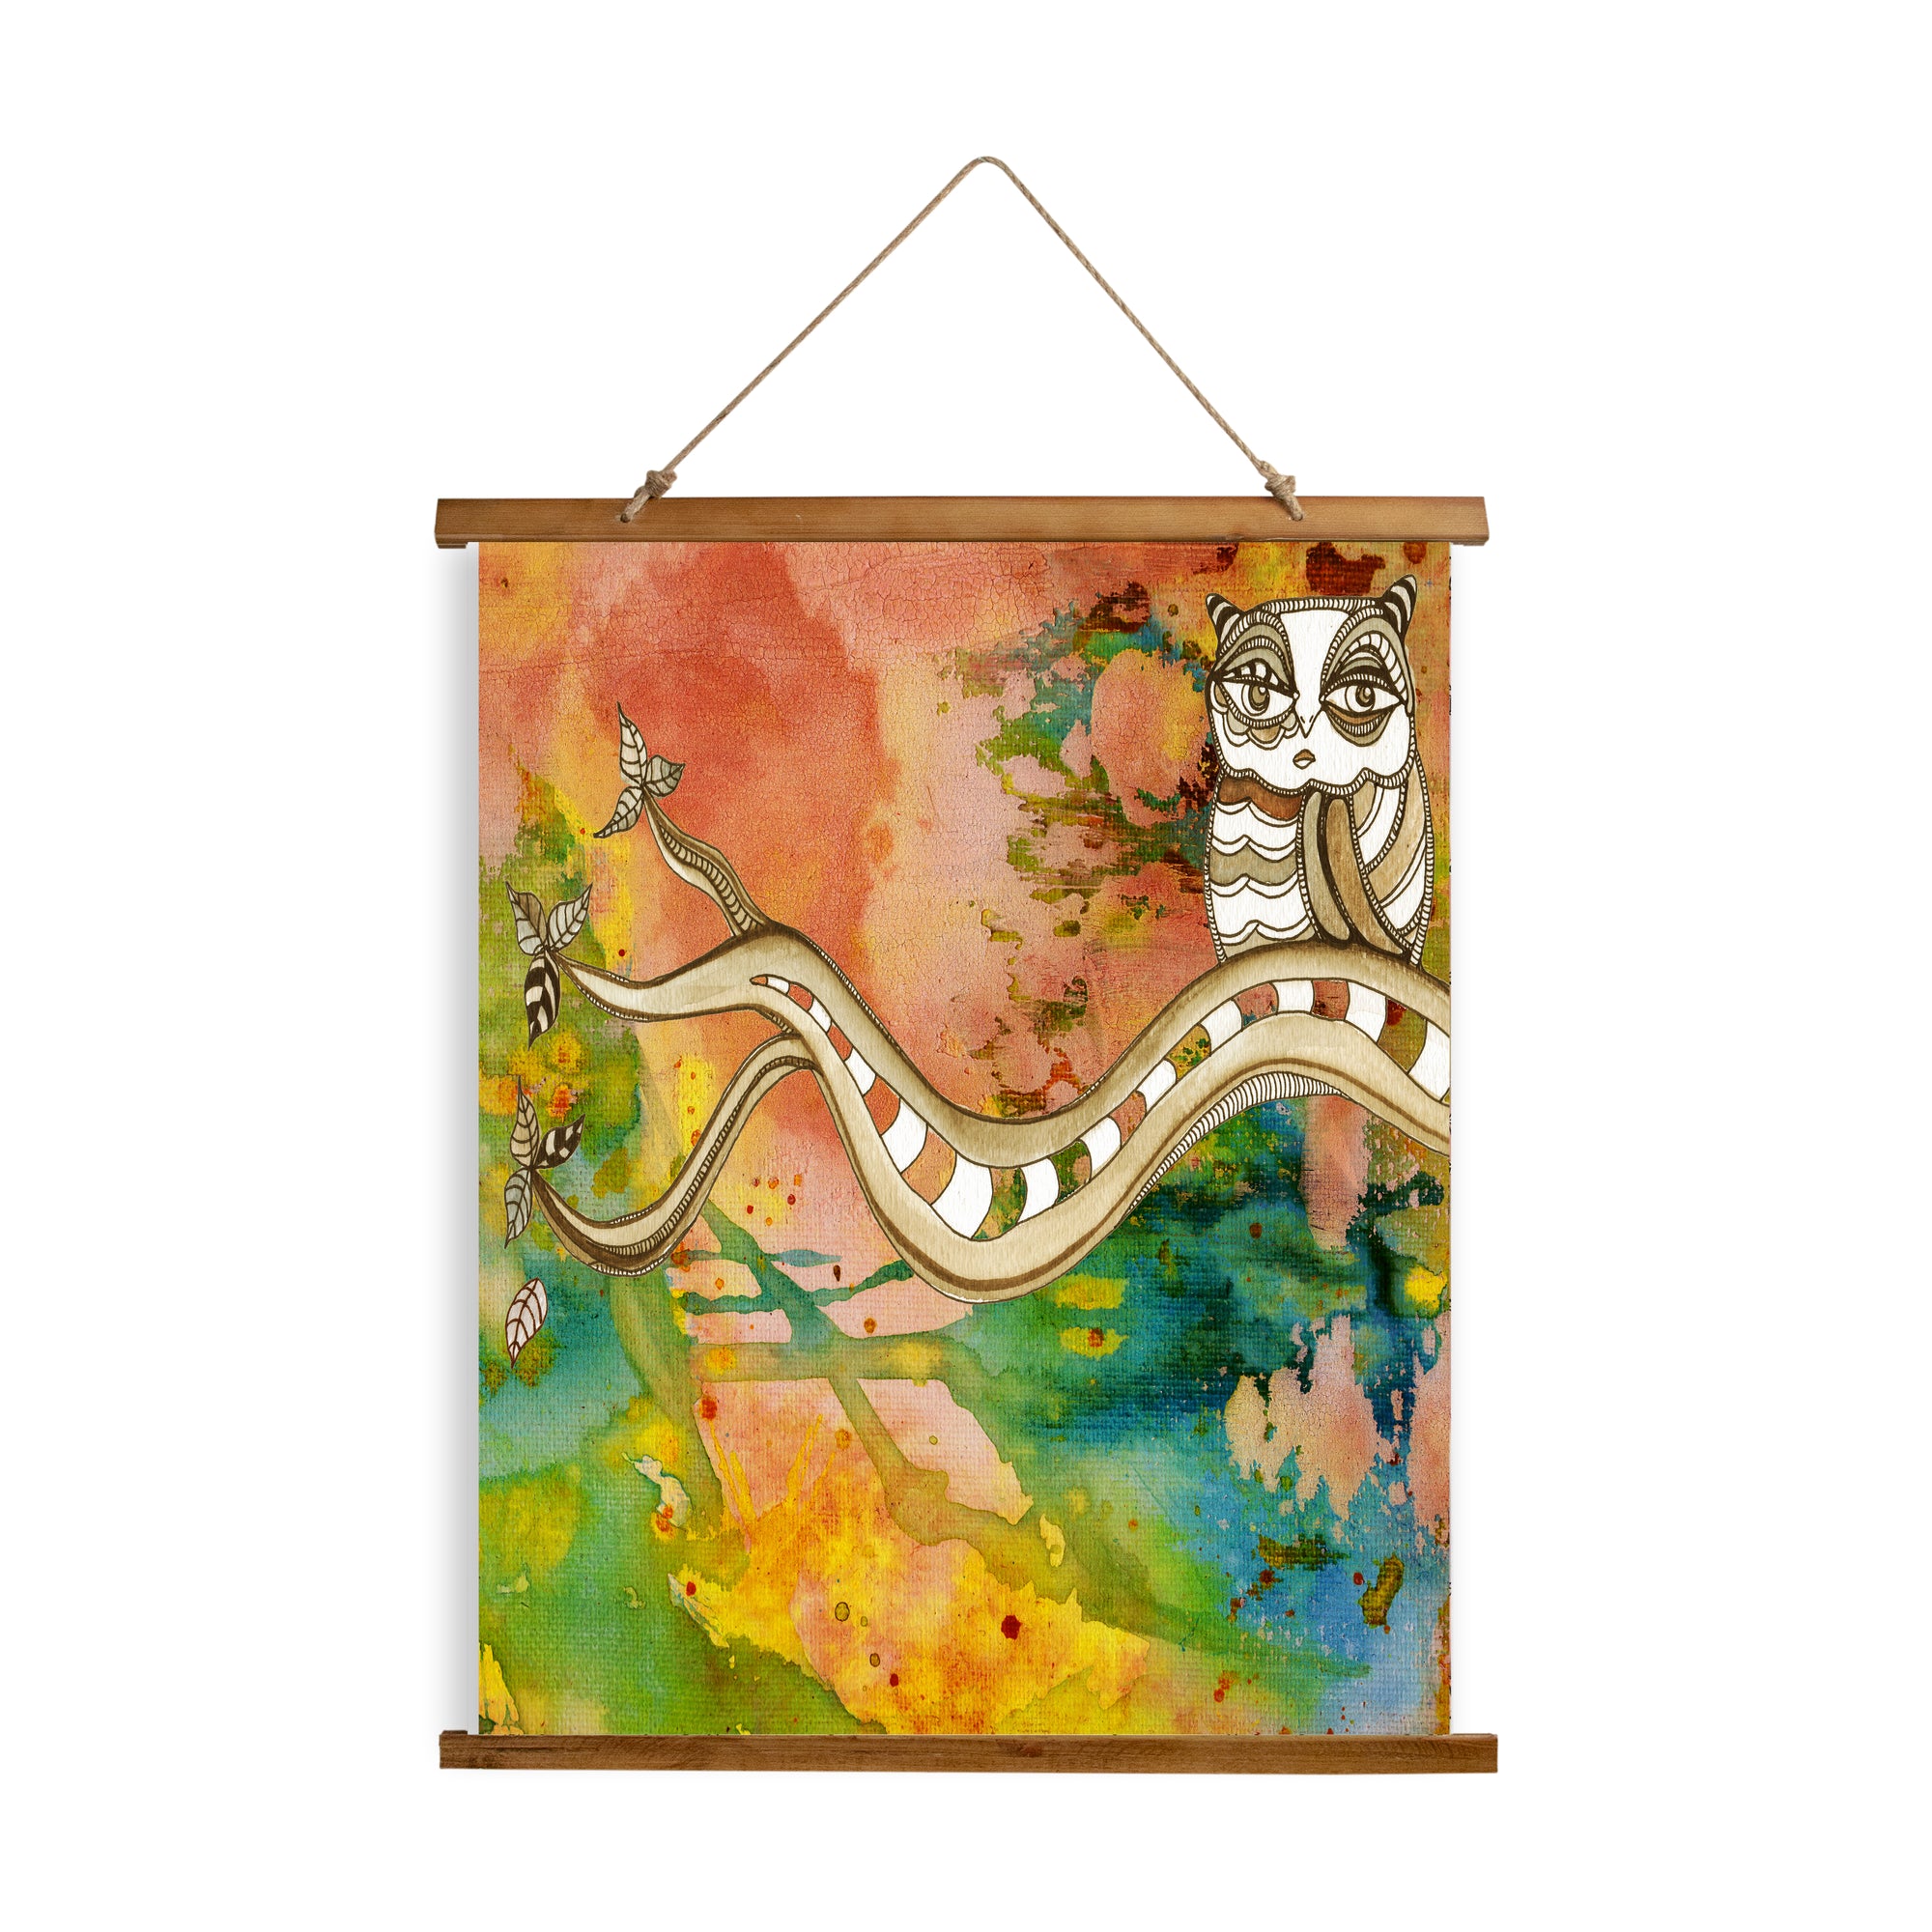 Whimsical Wood Slat Tapestry "Surreal Owl 2"